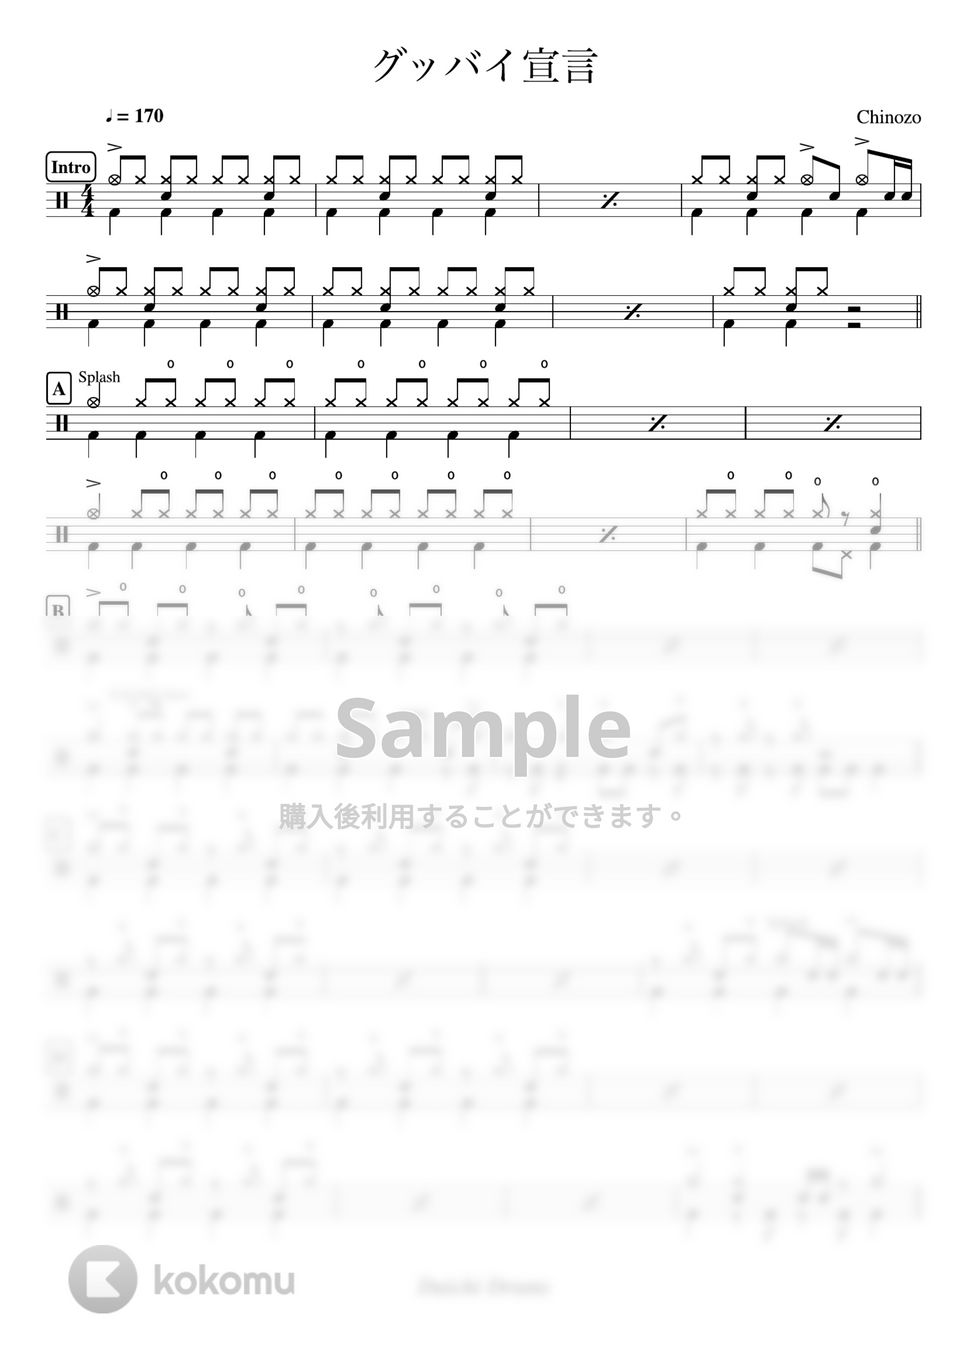 Chinozo - グッバイ宣言 by Daichi Drums